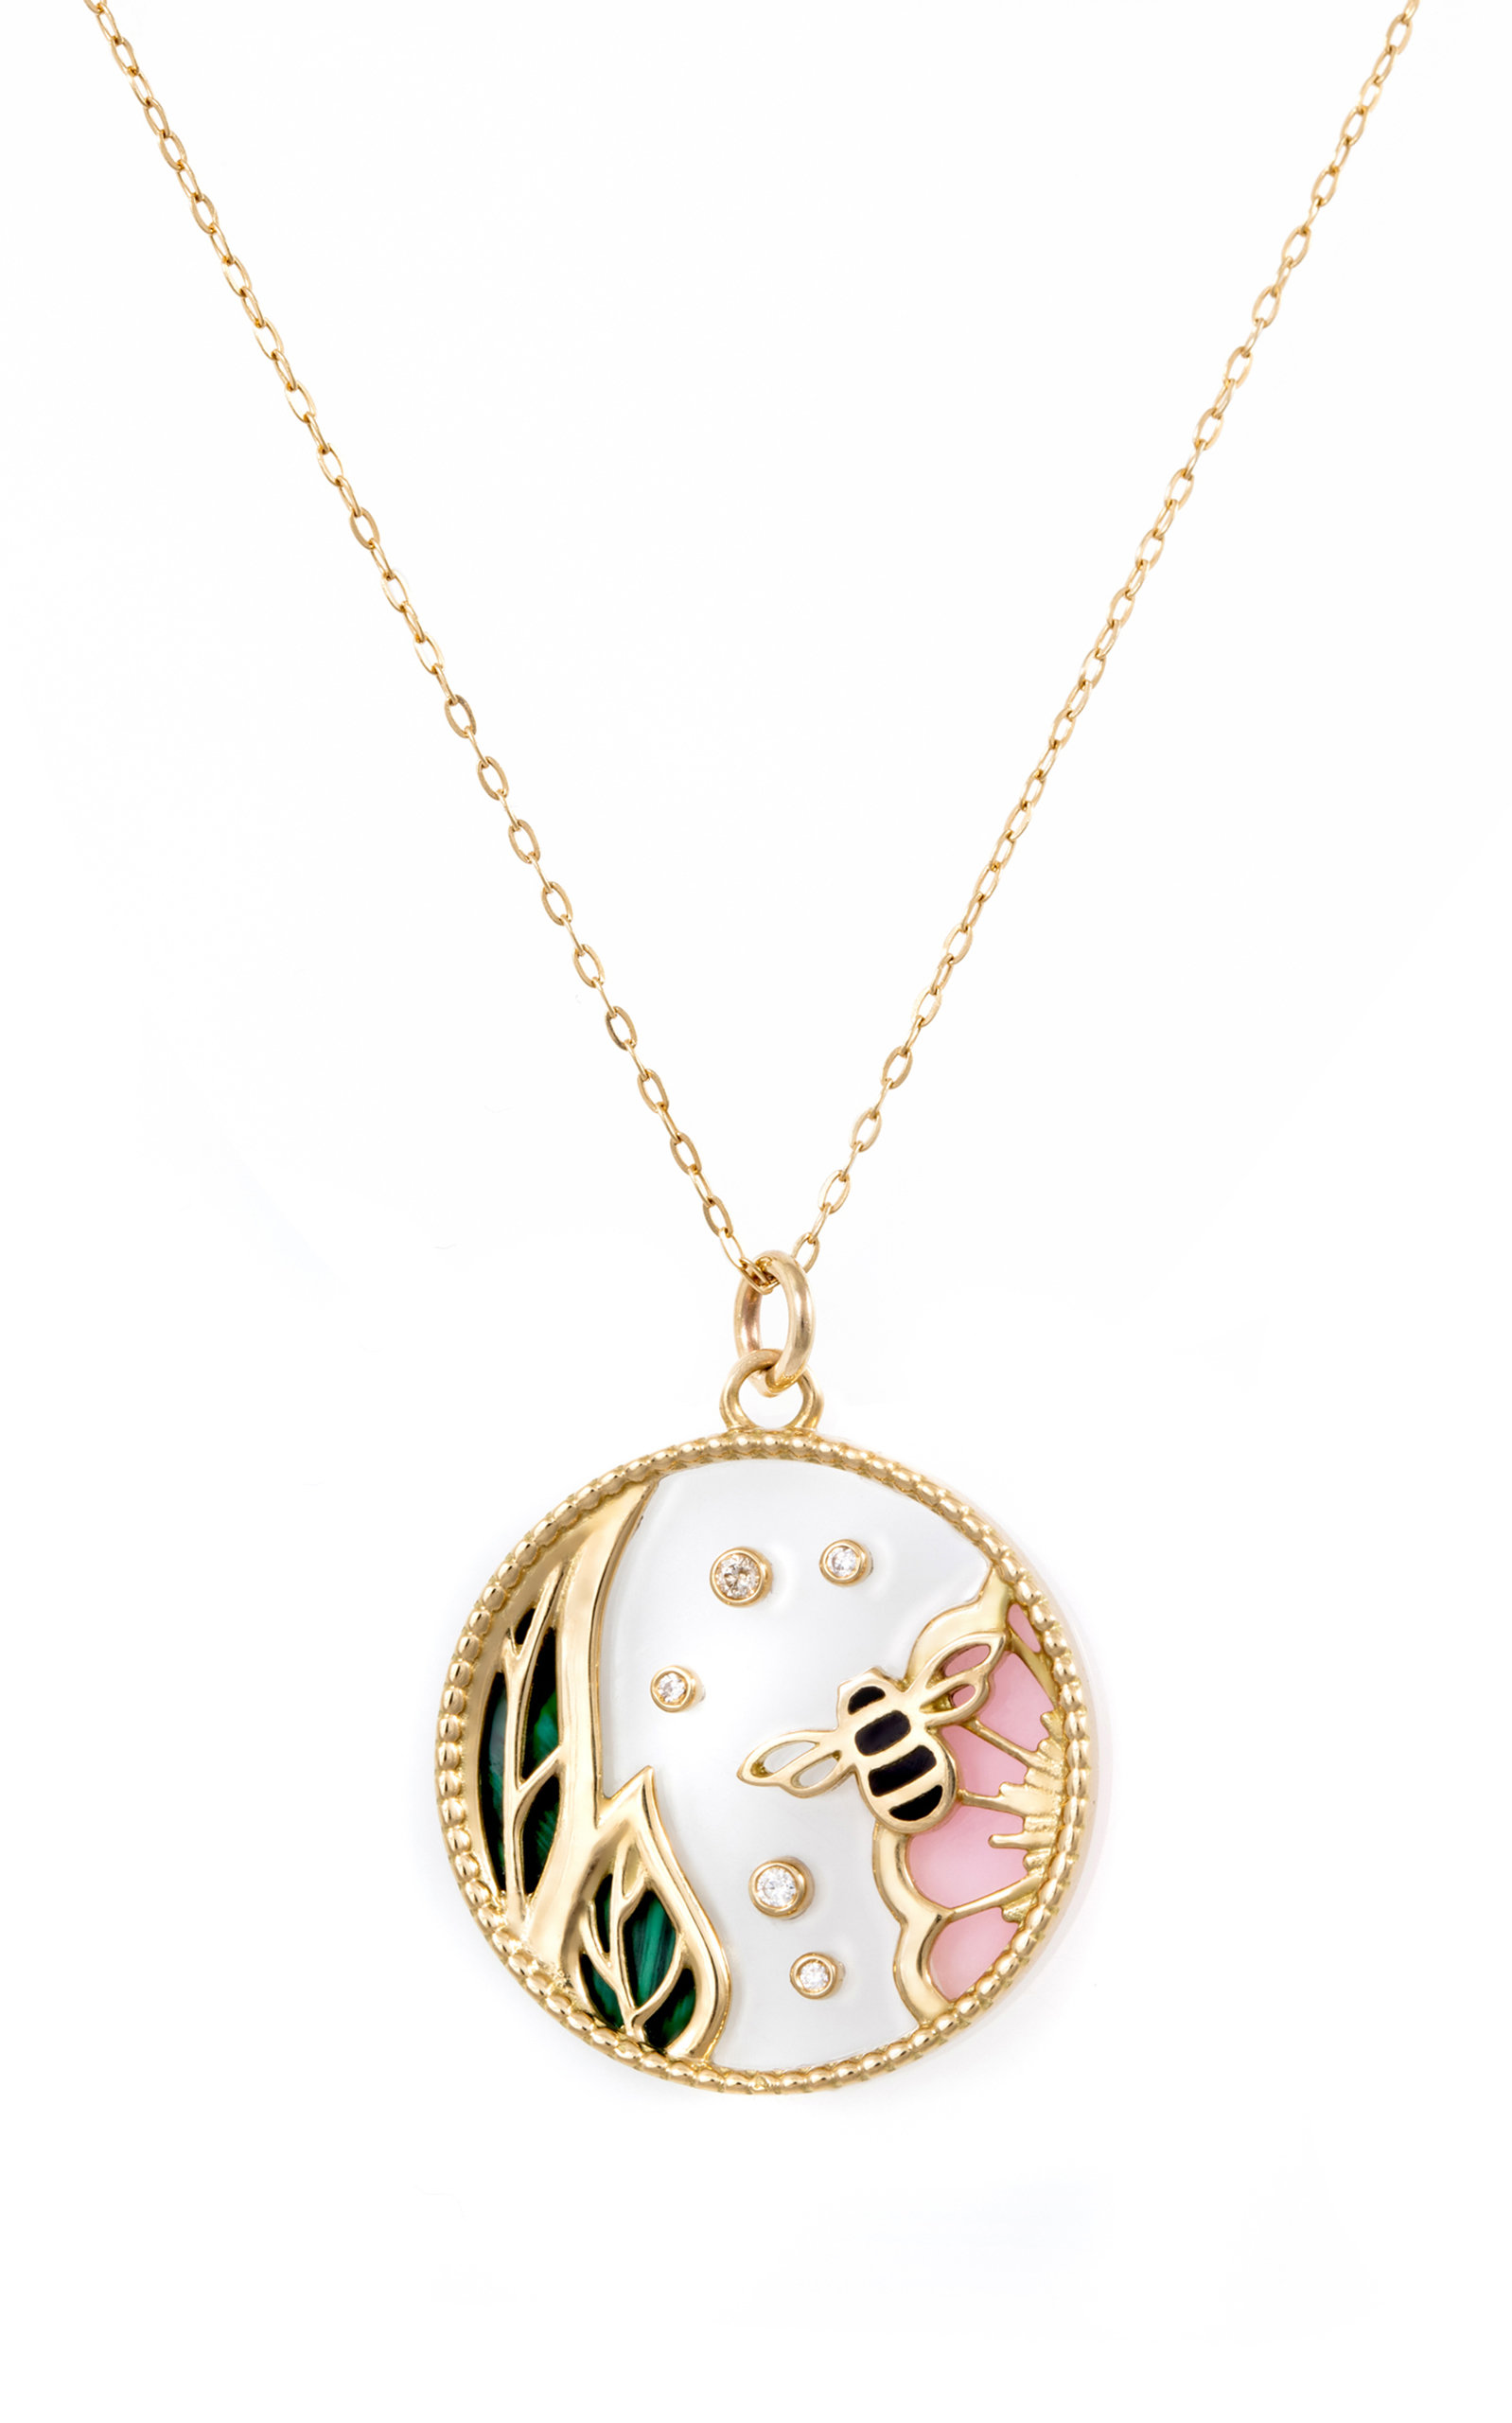 L'Atelier Nawbar Women's Love Spring 18K Yellow Gold Pendant Necklace